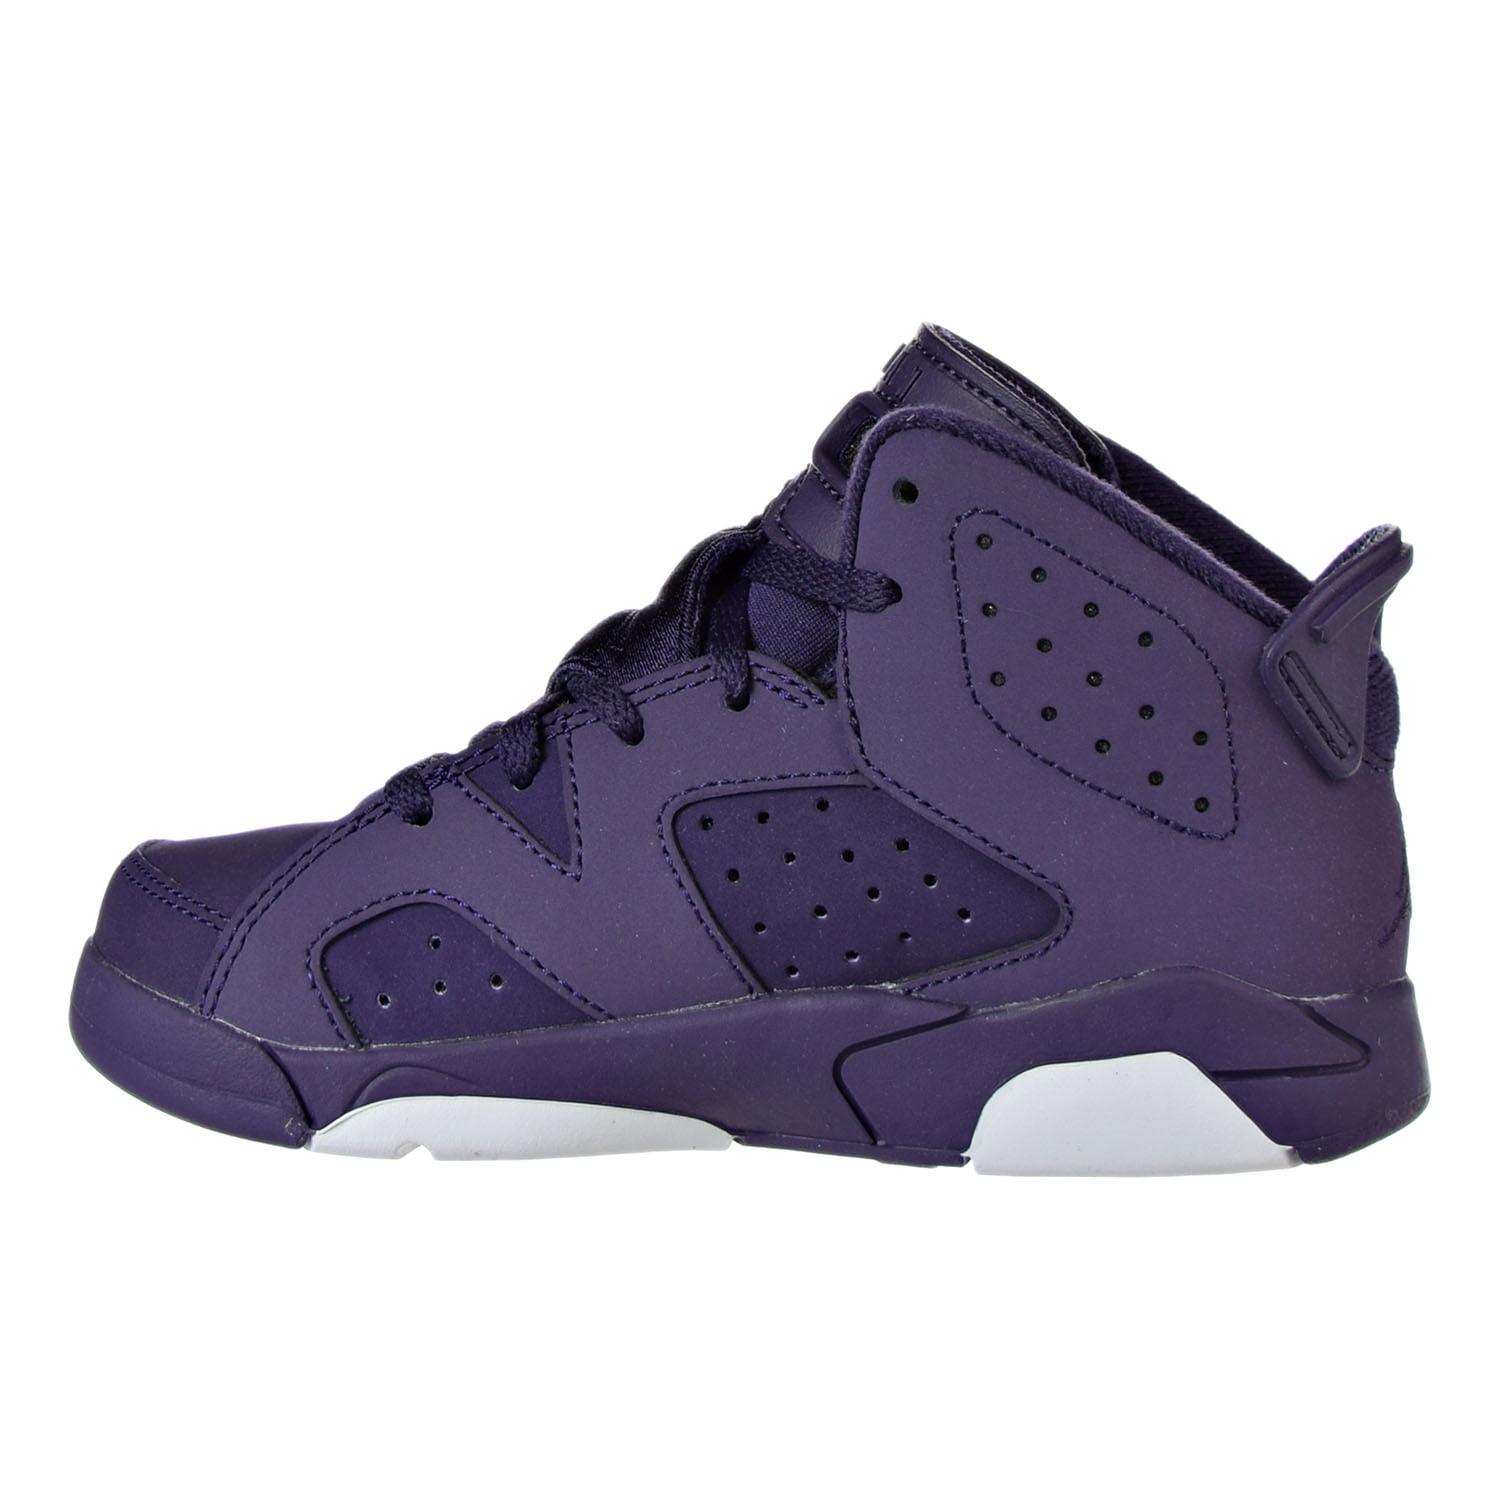 Shoes Purple Dynasty/Violet 543389-509 